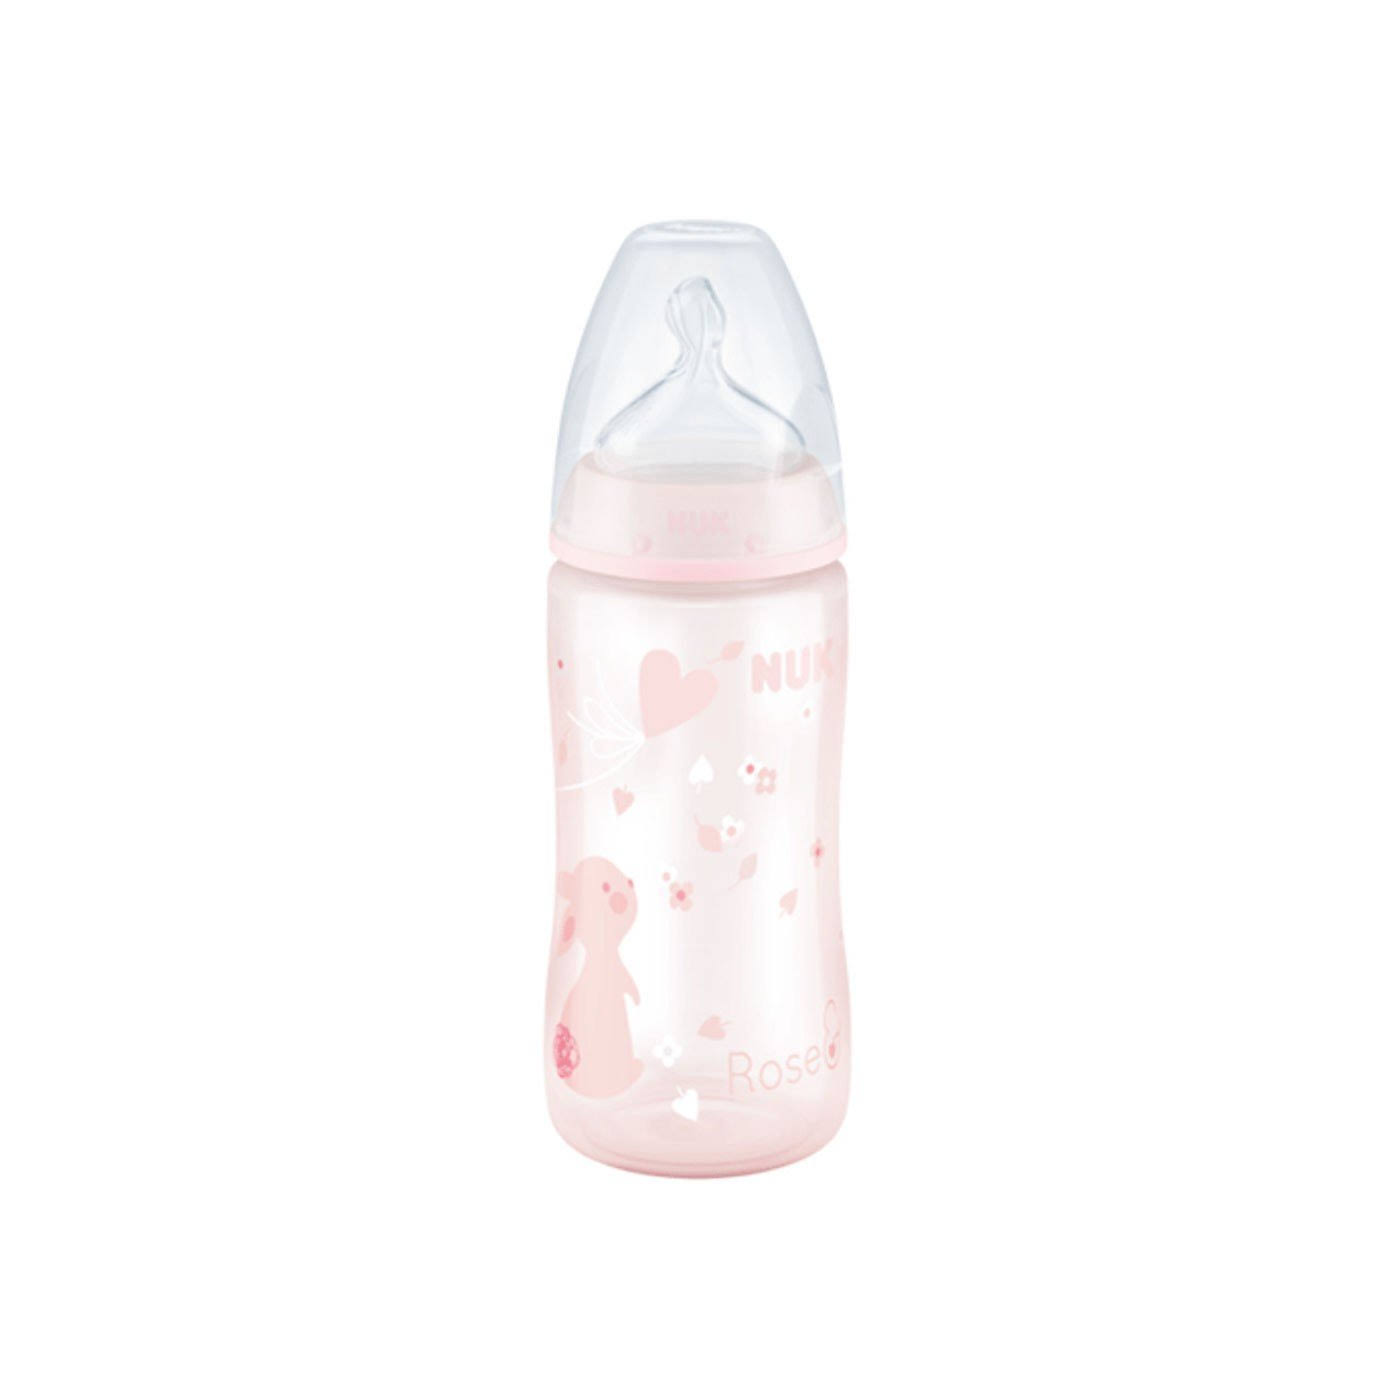 NUK First Choice Temp Control Bottle (Rose) - 300ml